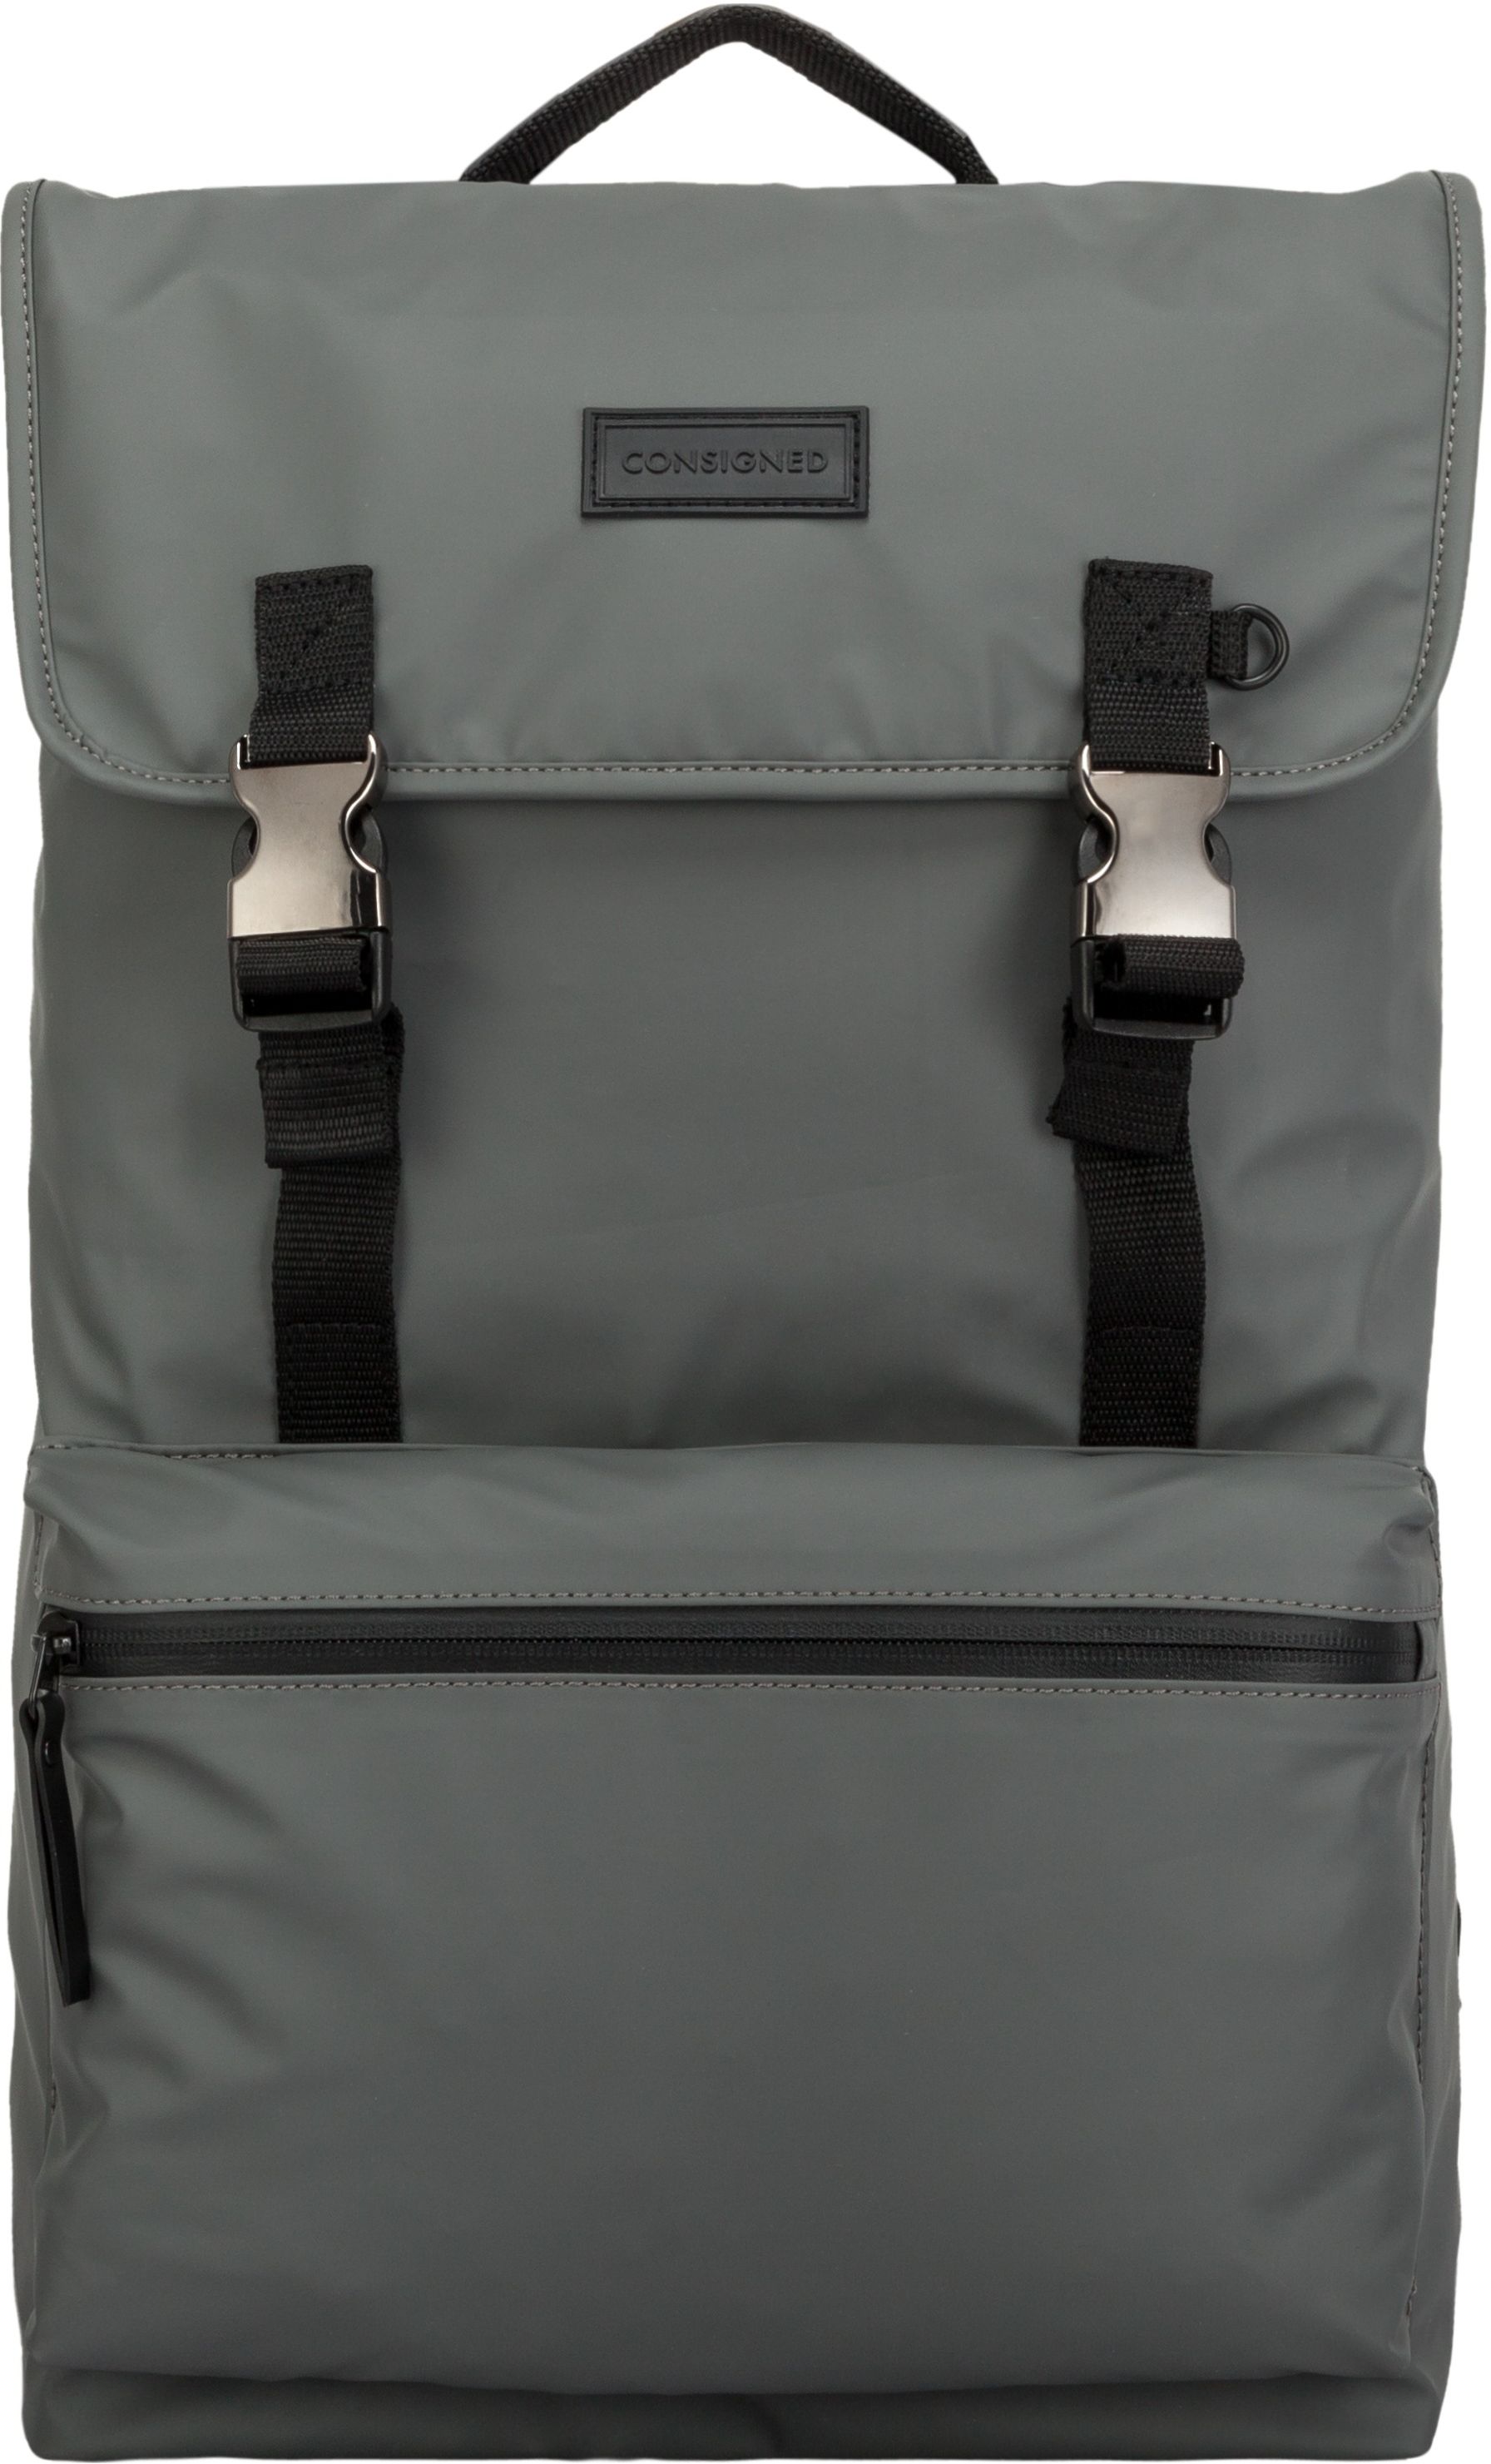 Unisex backpack